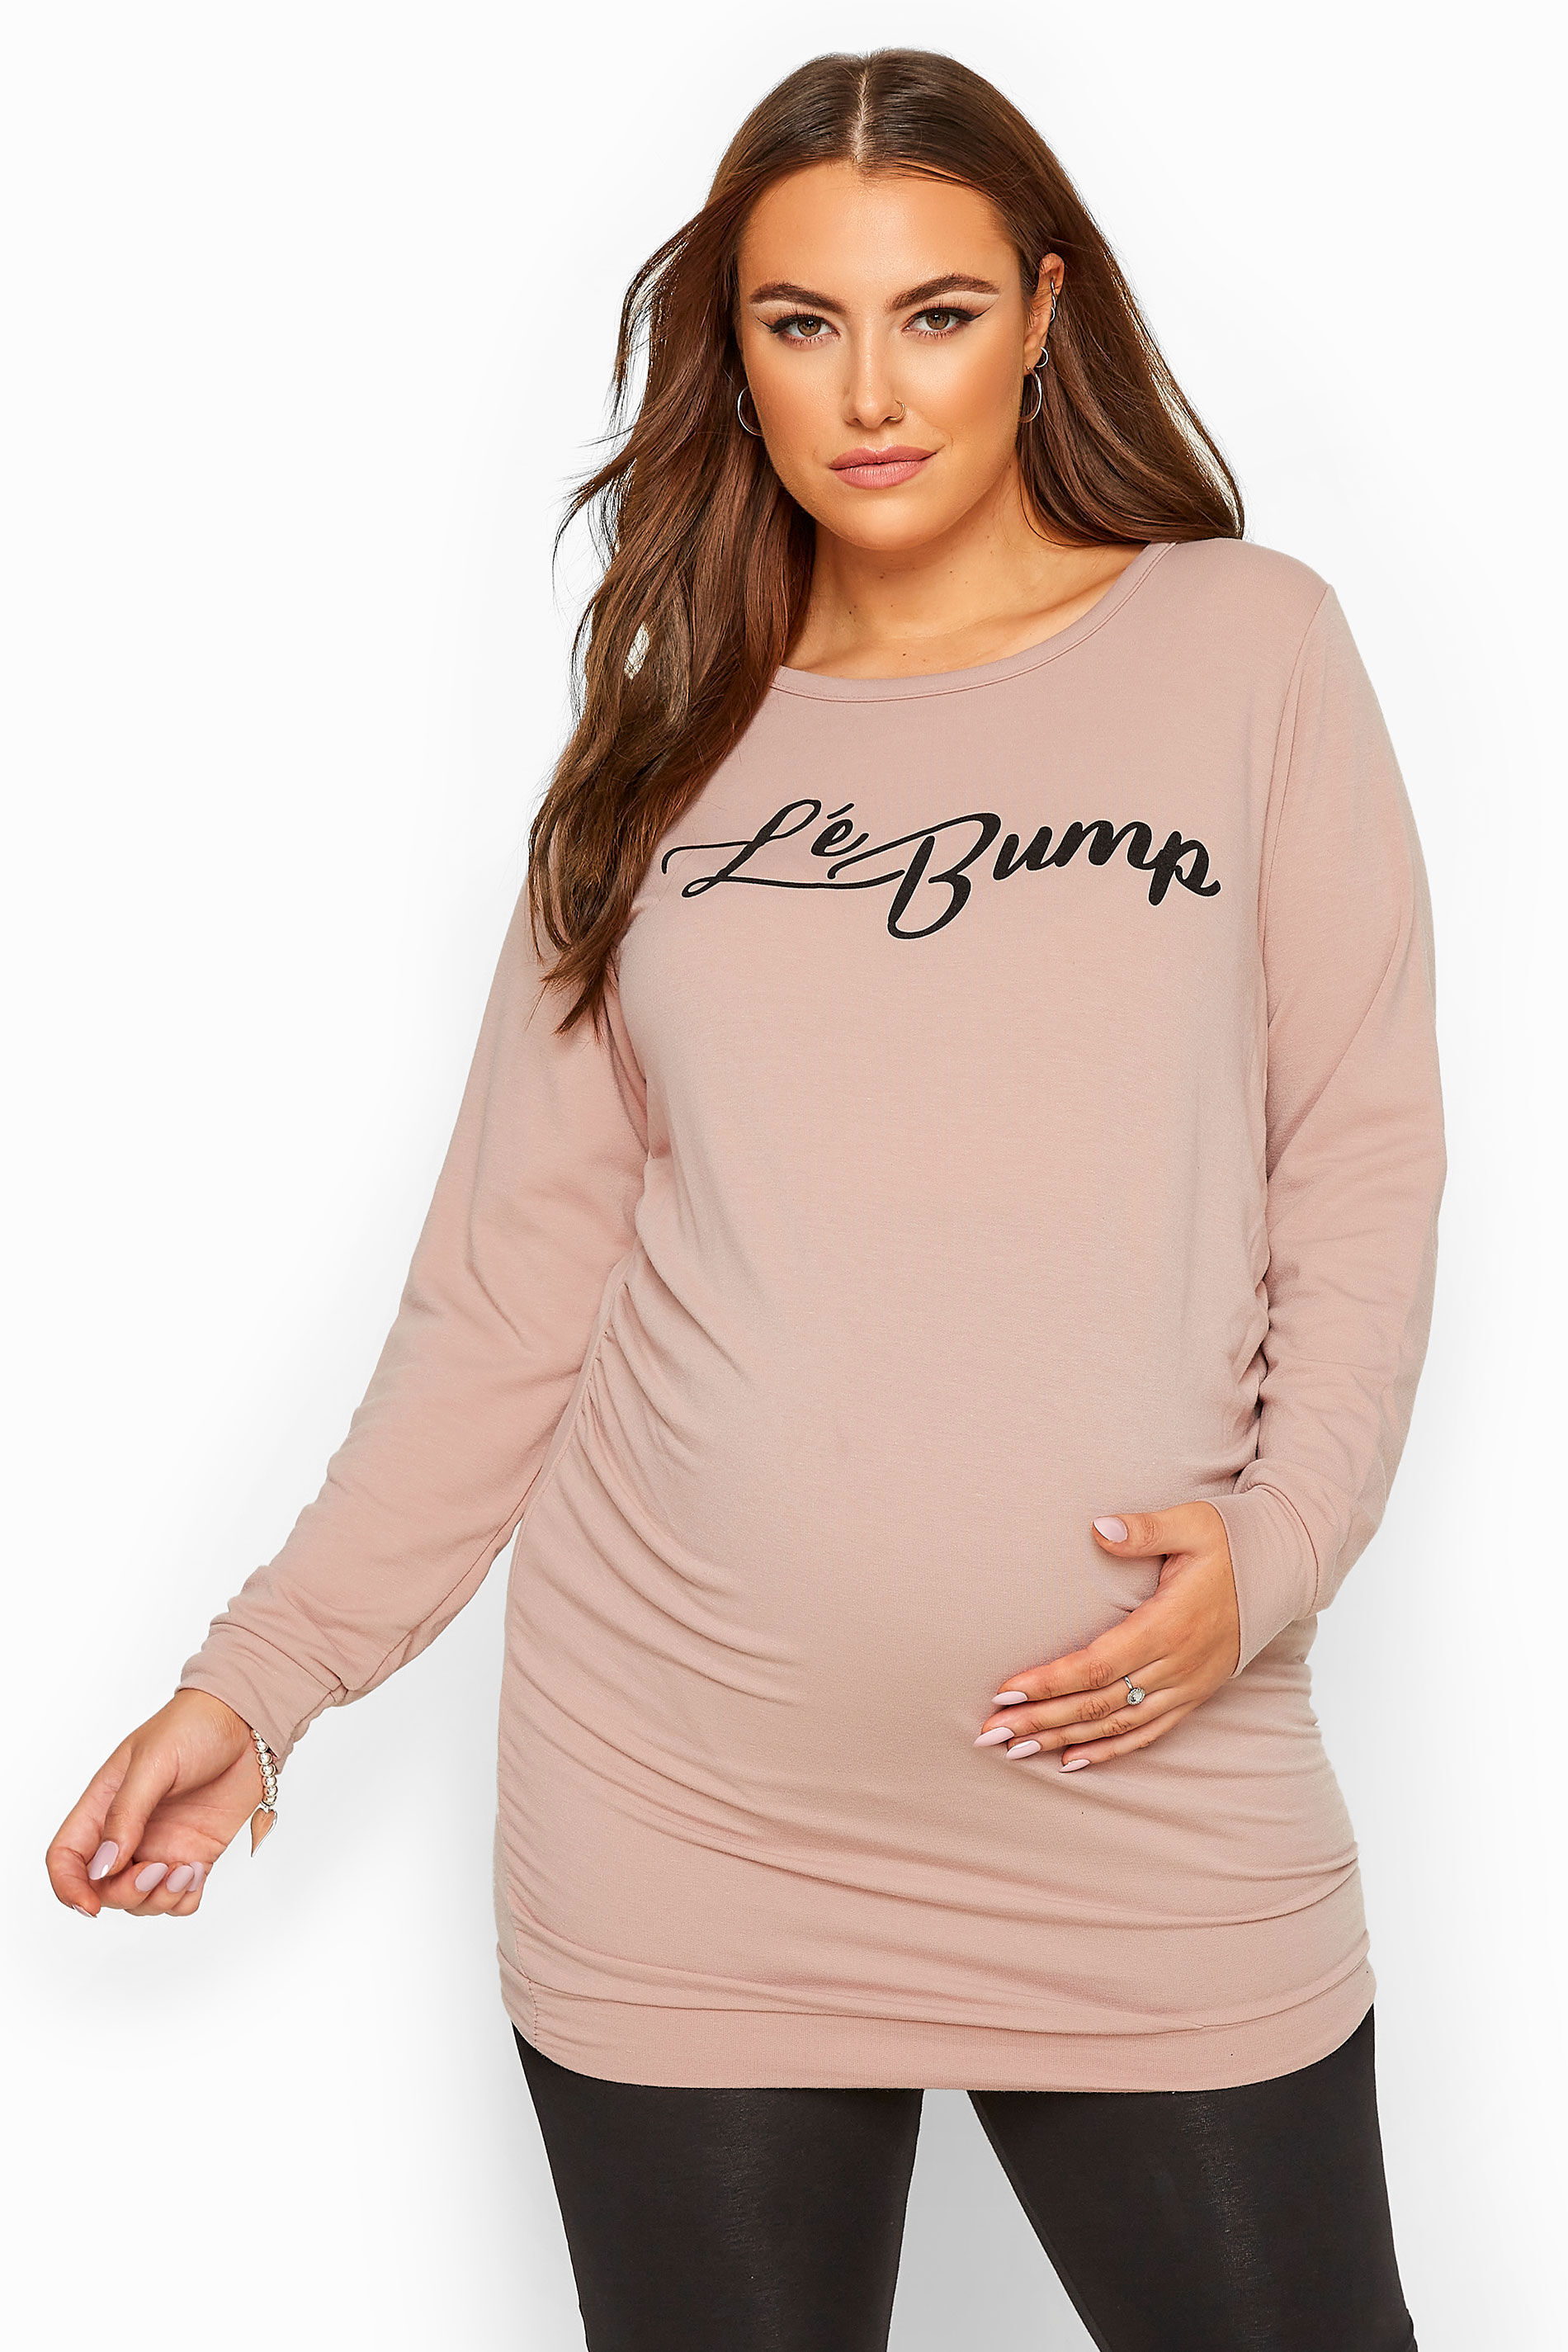 Yours Clothing Bump it up maternity nude 'lé bump' slogan sweatshirt